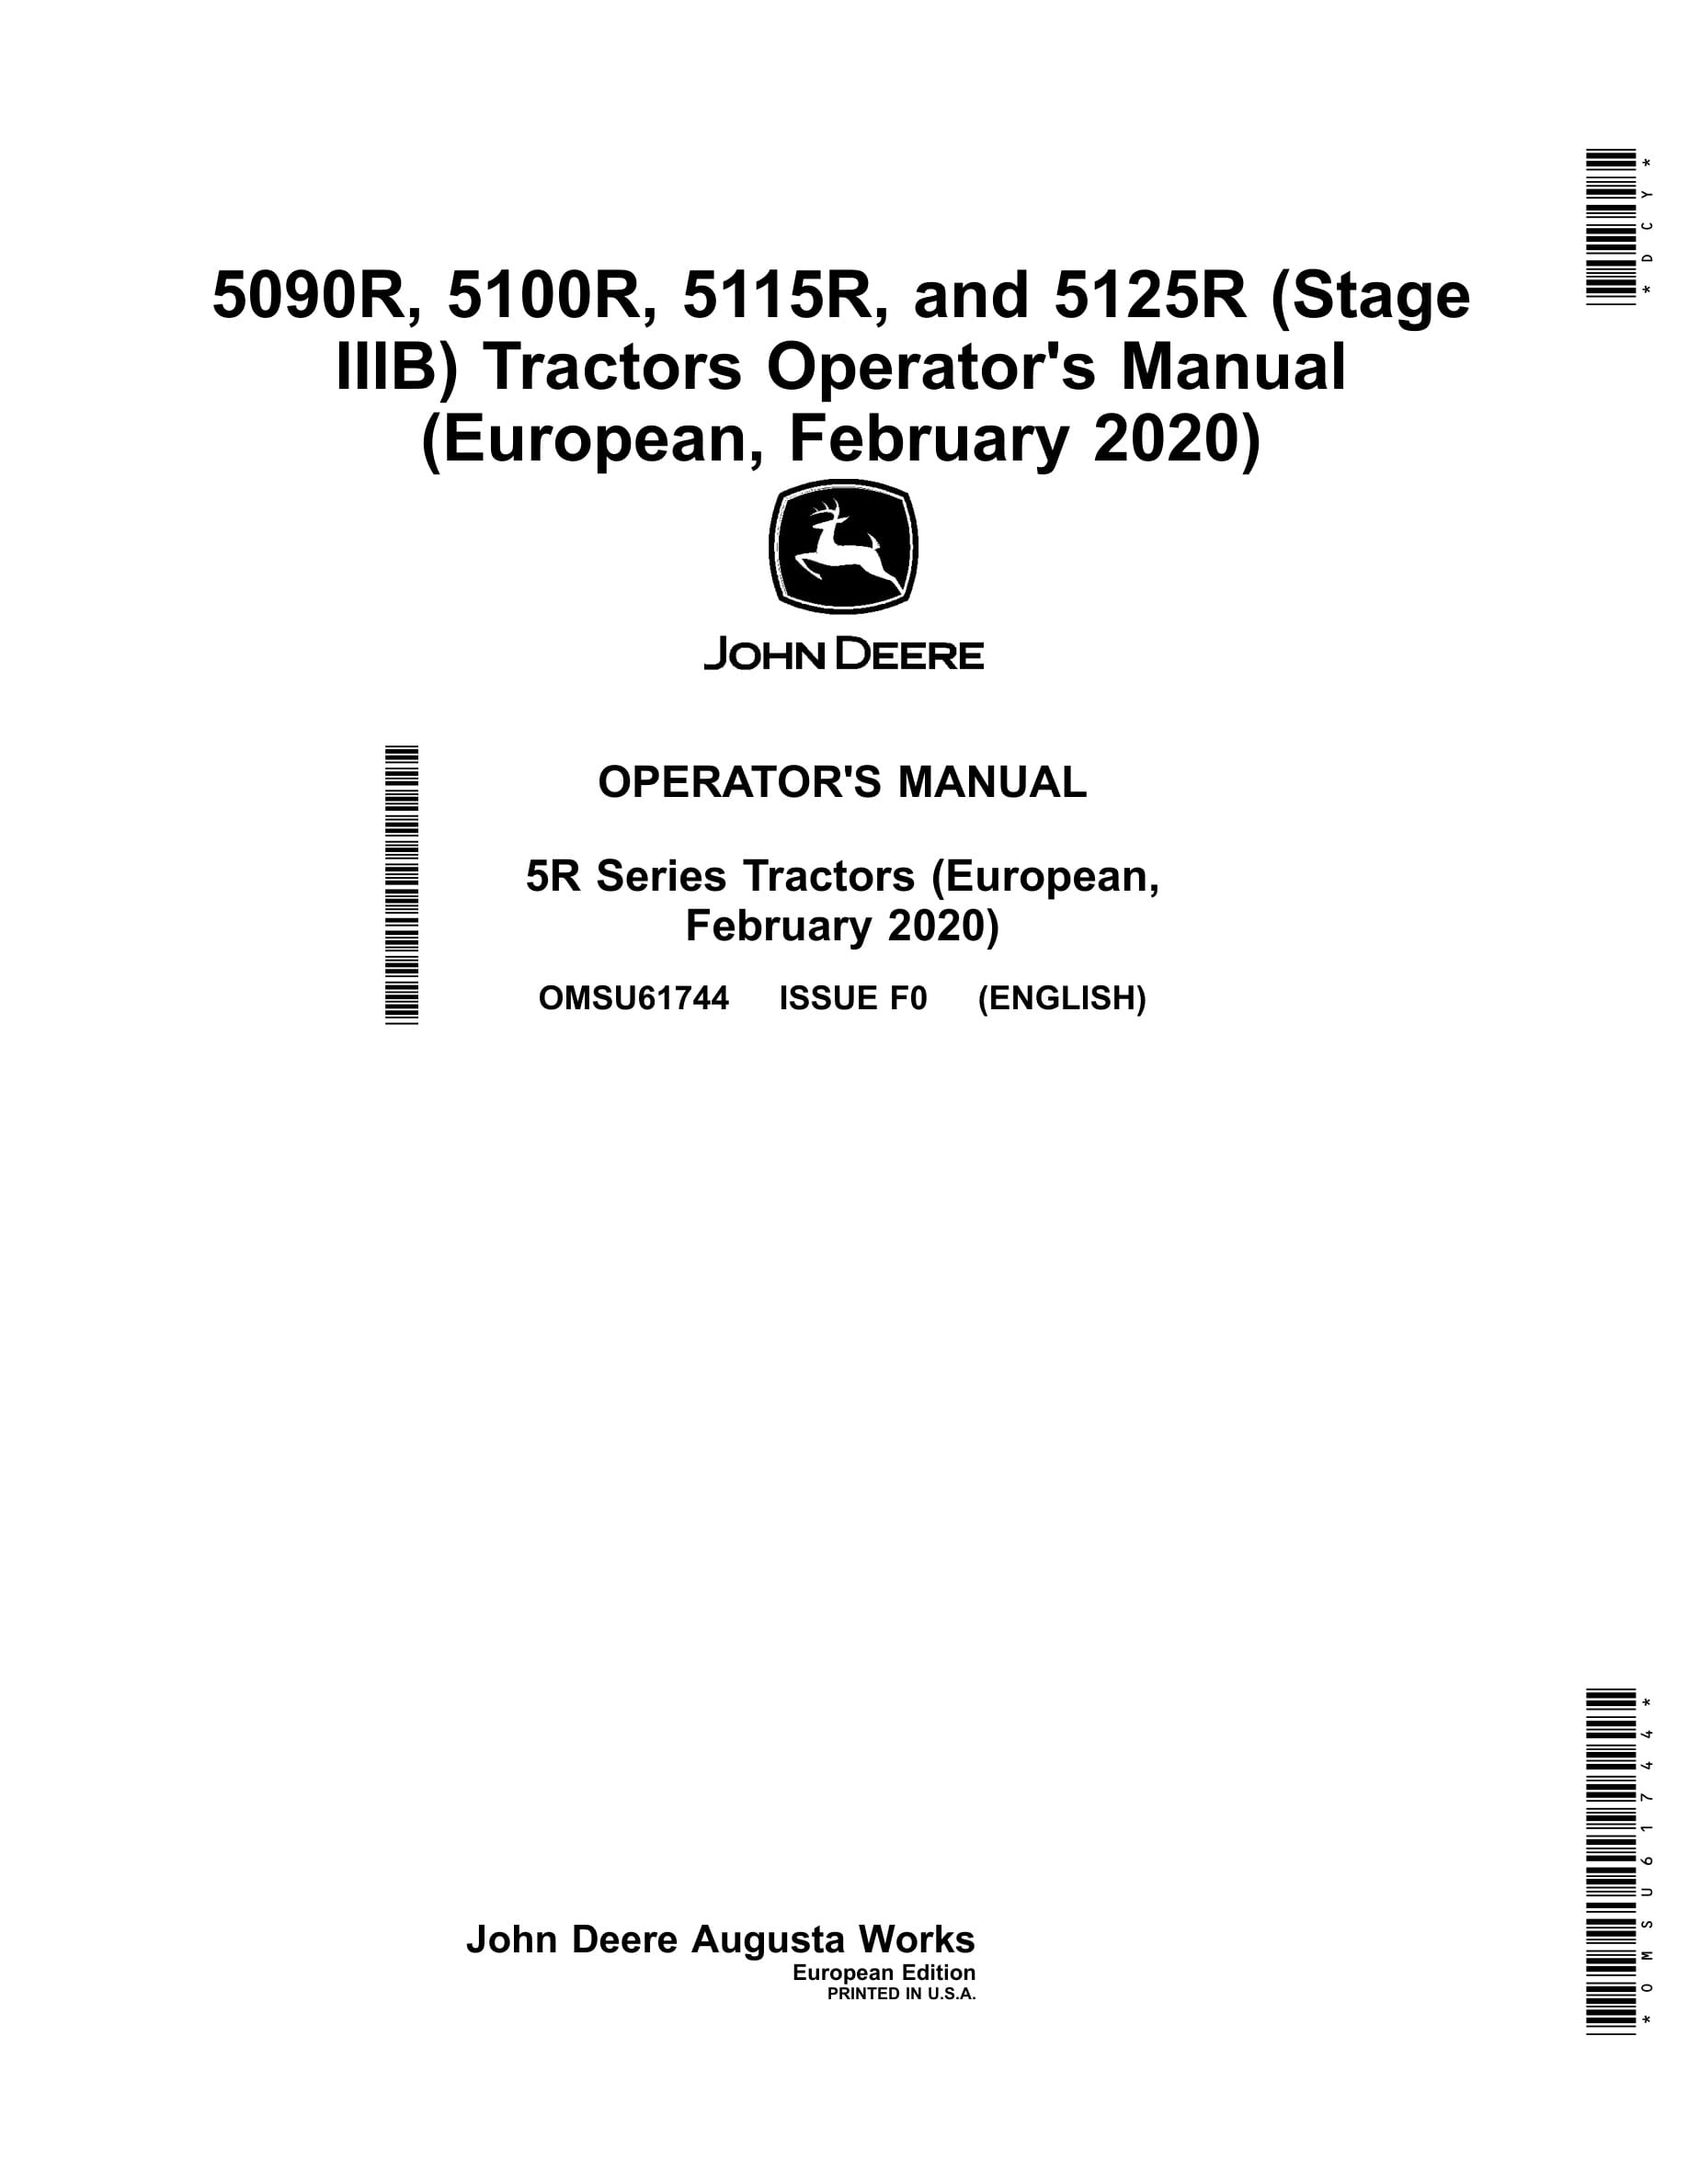 John Deere 5090r, 5100r, 5115r, And 5125r (stage Iiib) Tractors Operator Manuals OMSU61744-1